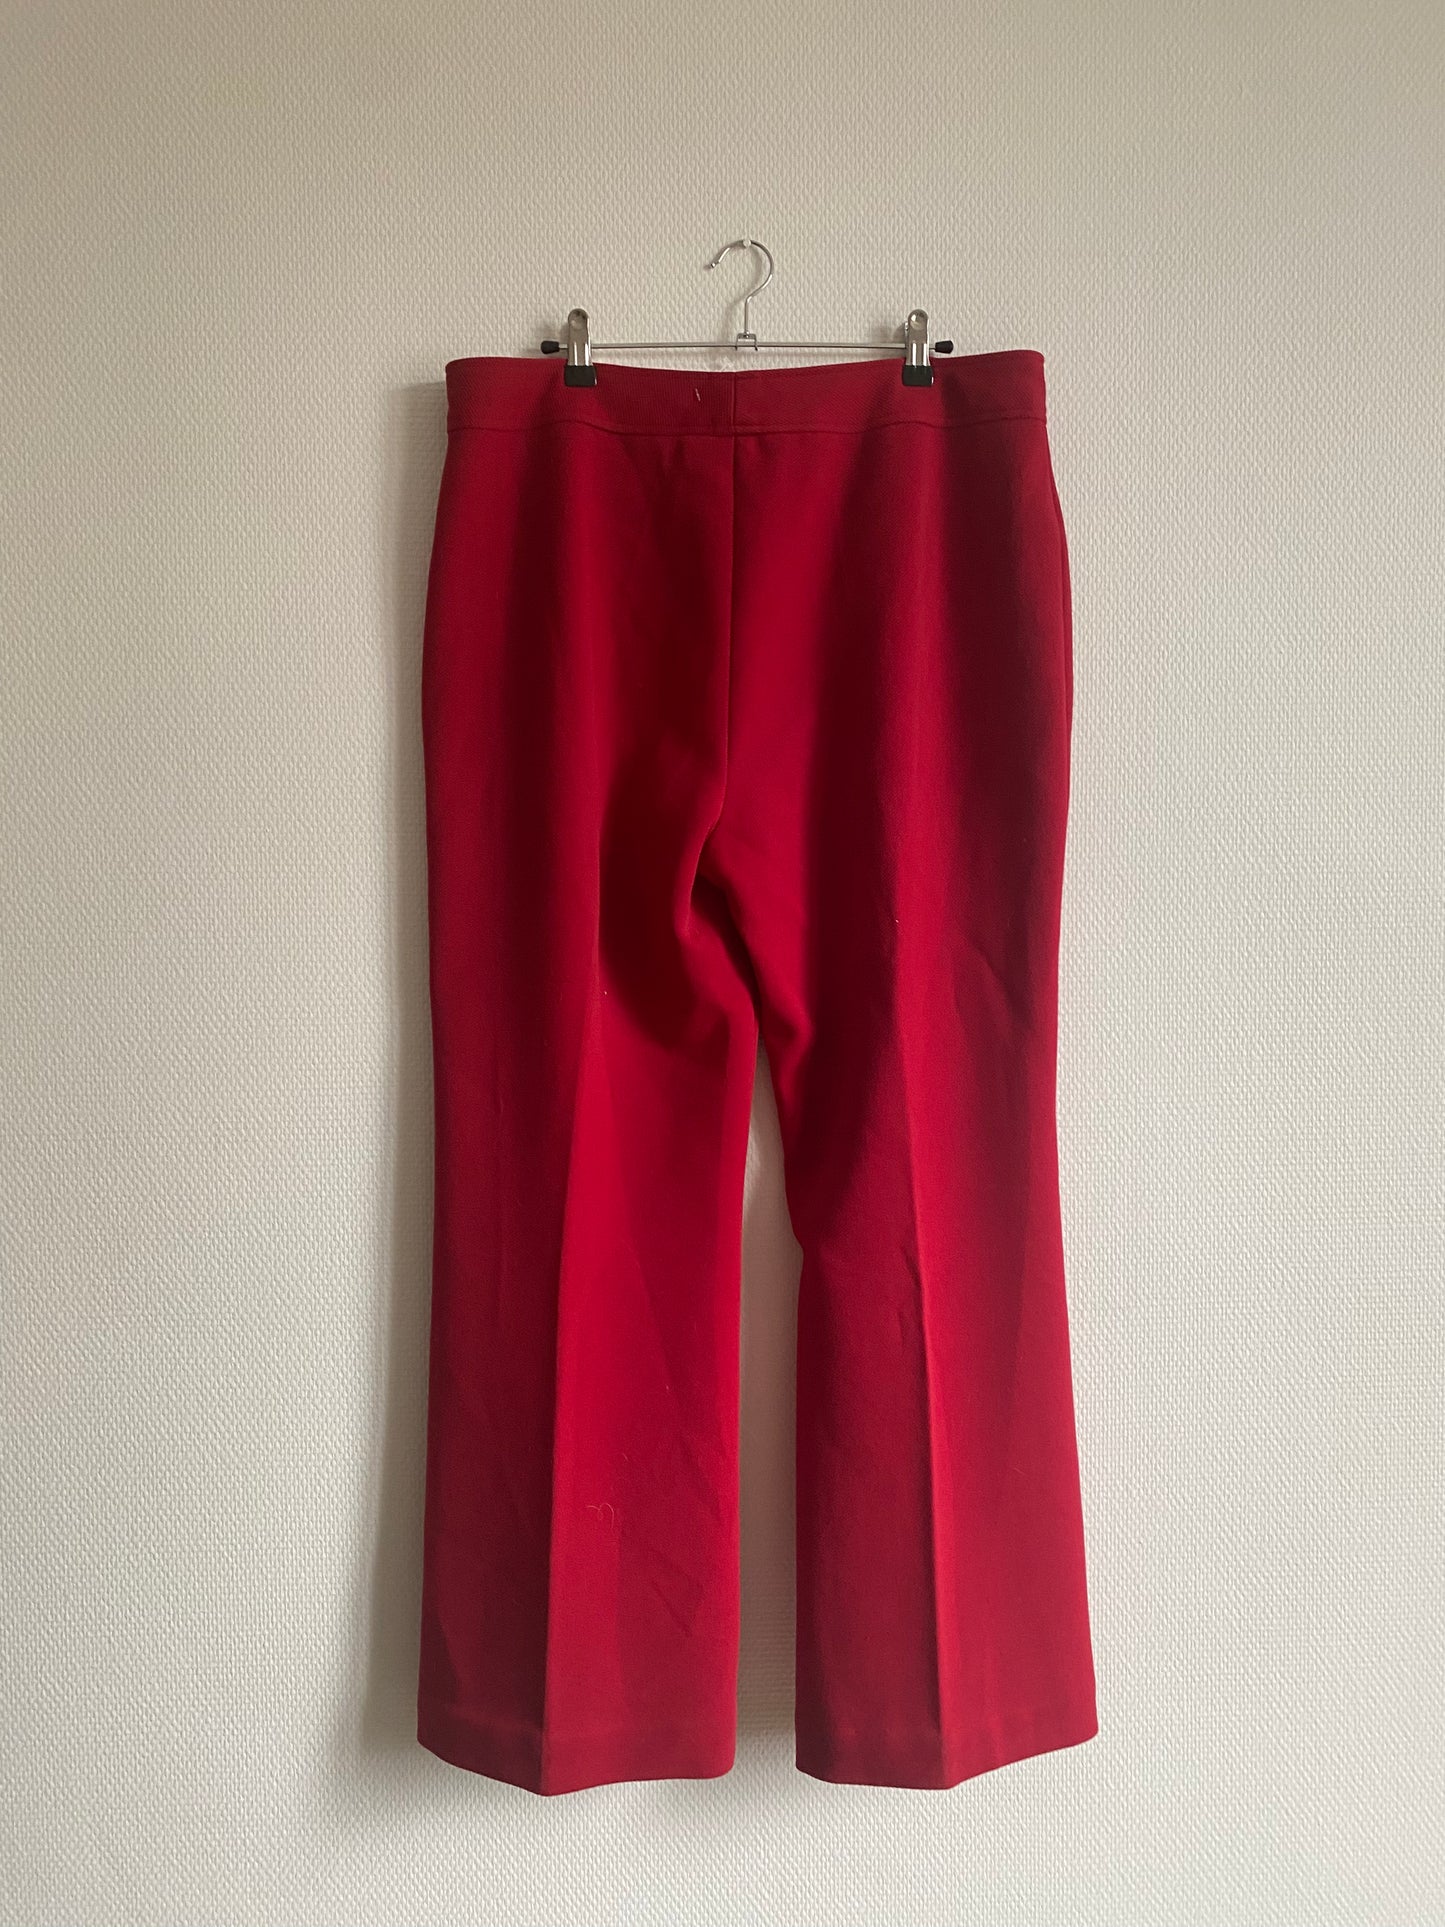 Pantalon rouge 70s